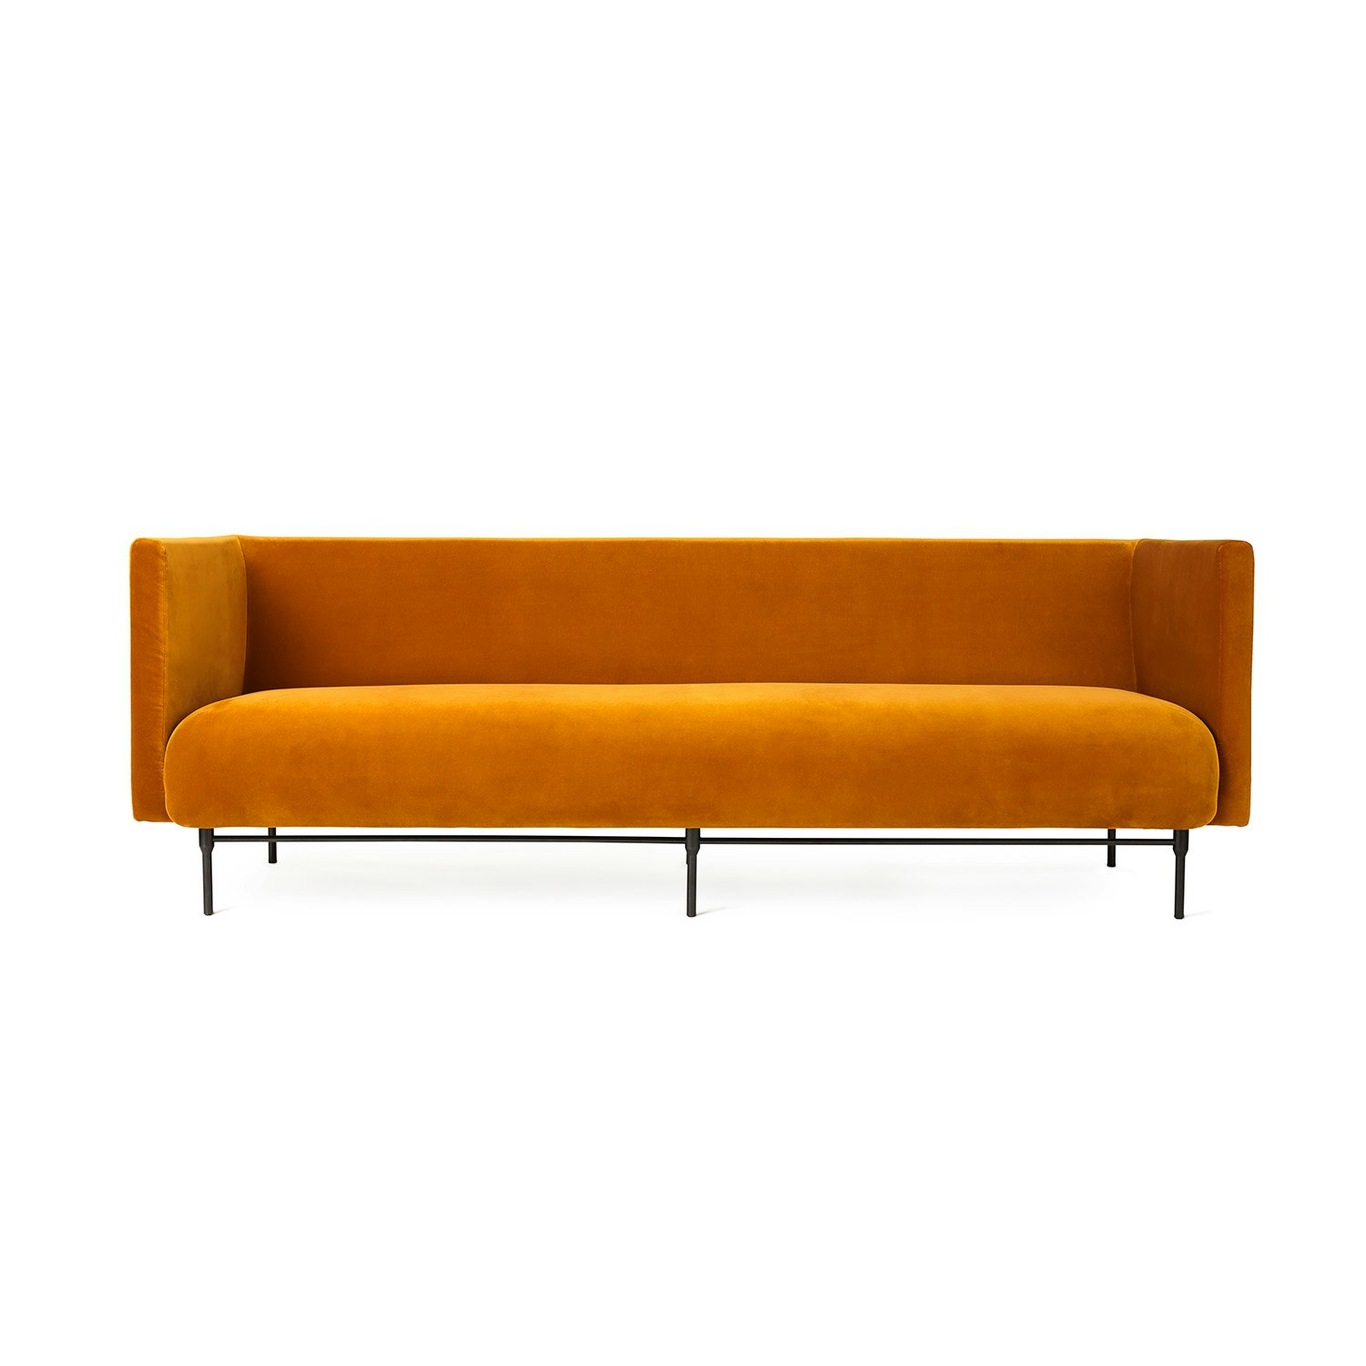 Galore 3-Seater Sofa, Amber